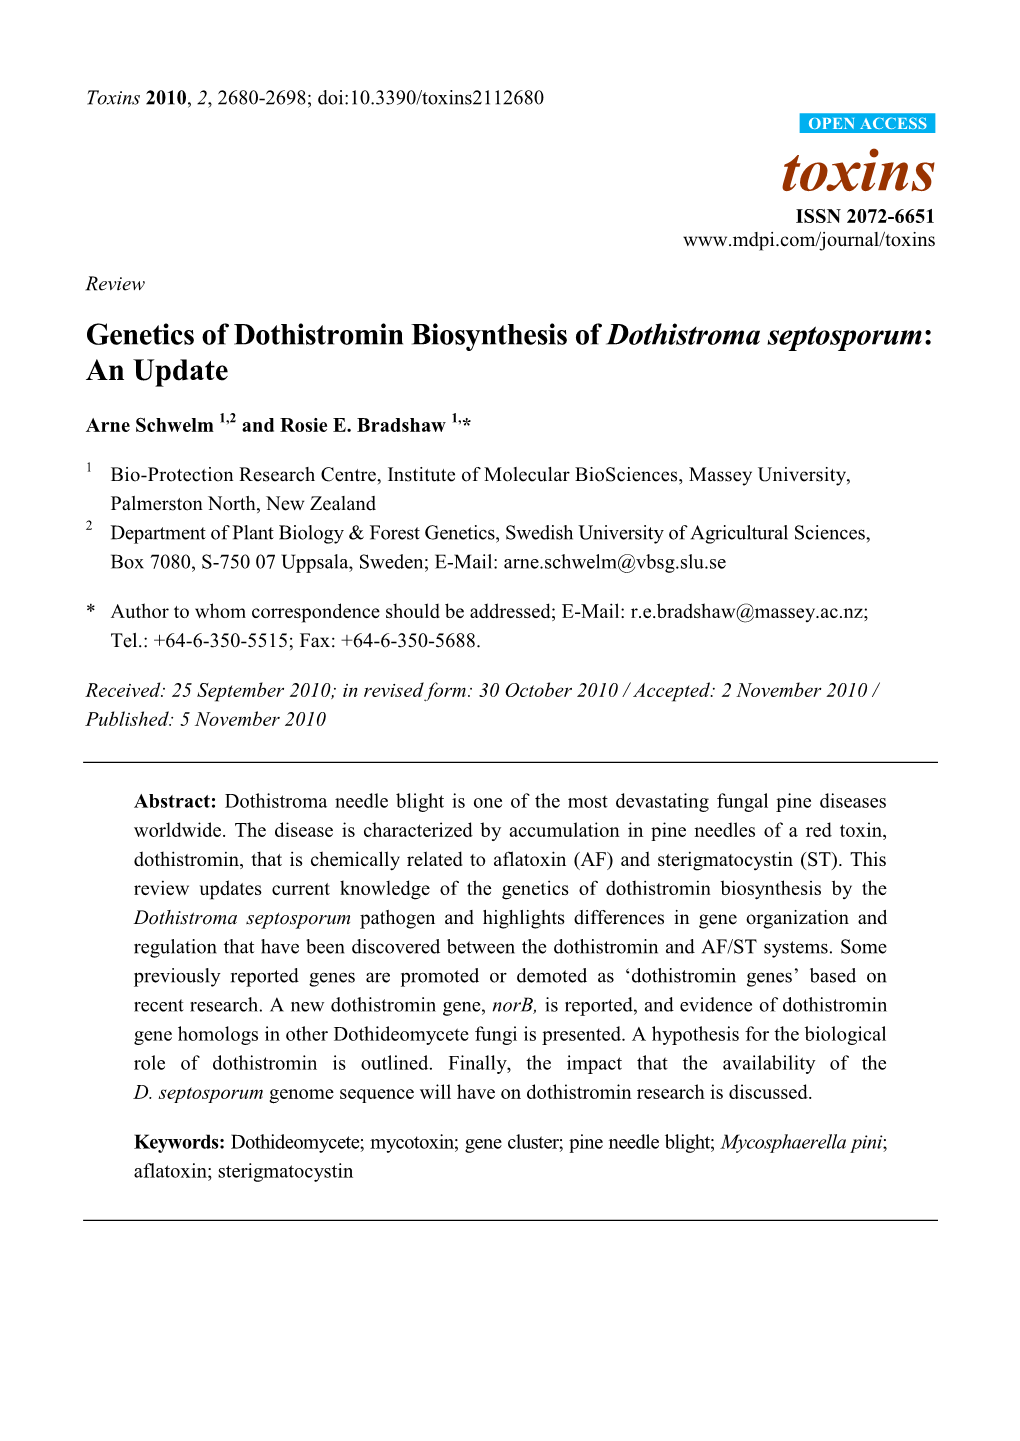 Genetics of Dothistromin Biosynthesis of Dothistroma Septosporum: an Update